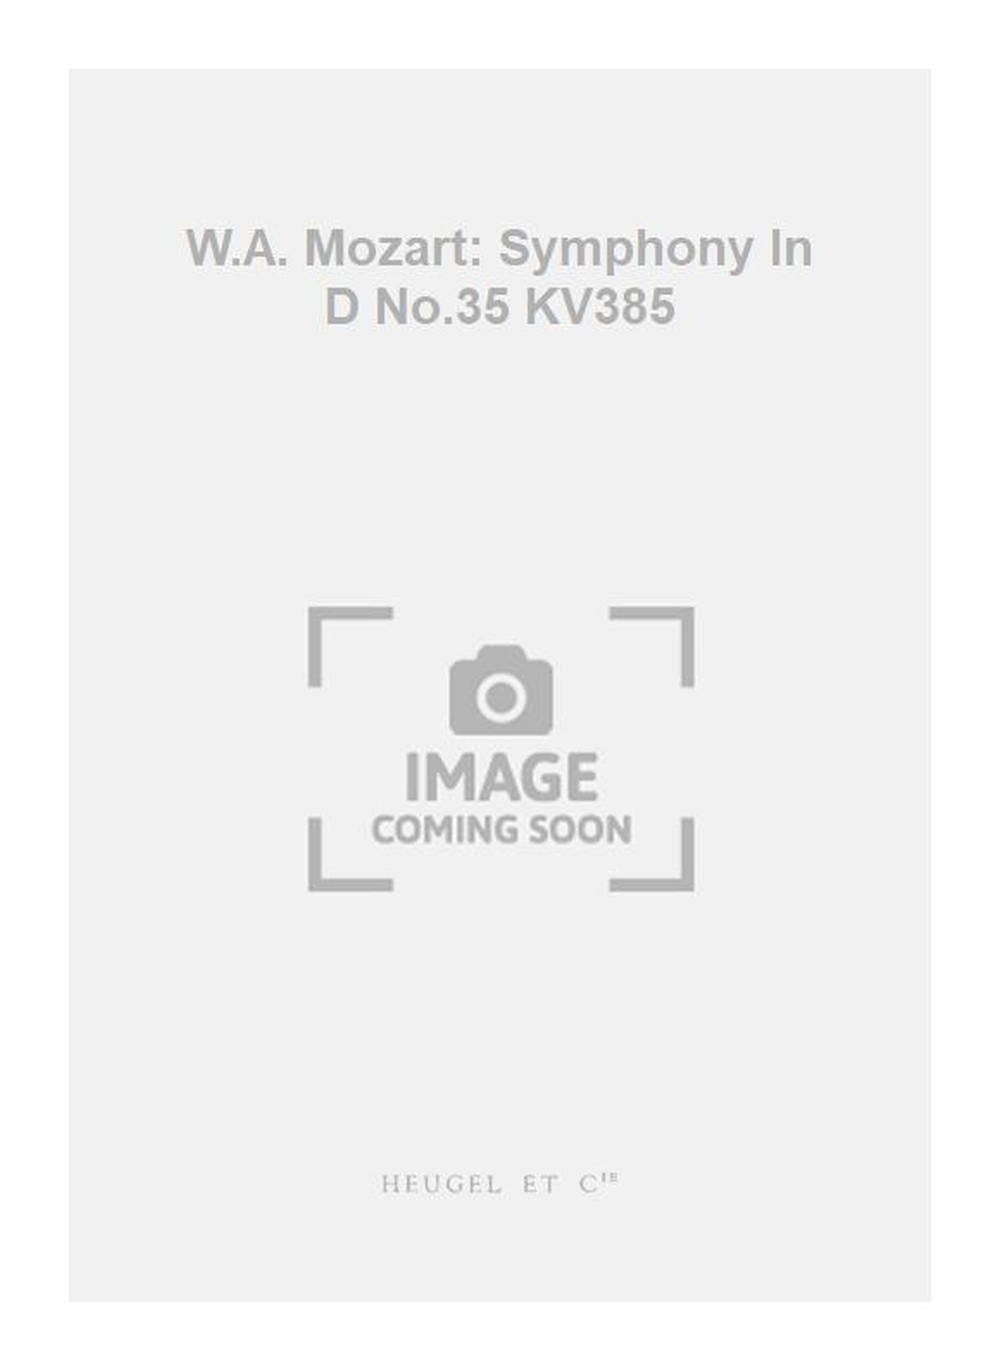 Wolfgang Amadeus Mozart: W.A. Mozart: Symphony In D No.35 KV385